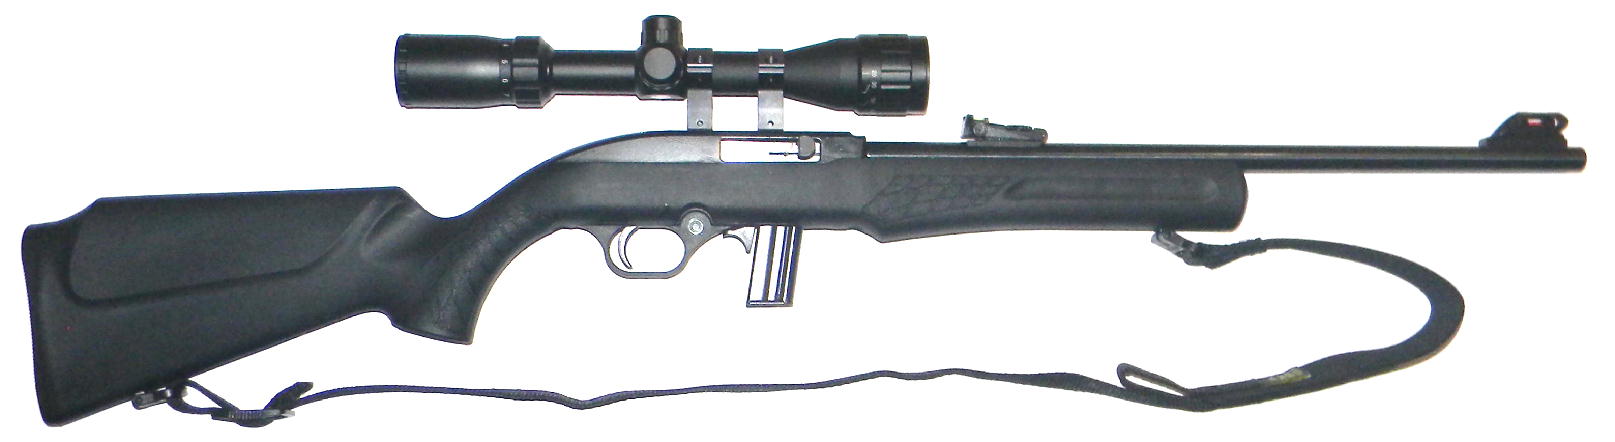 Rossi RS22 Semi-Automatic 22LR Rifle